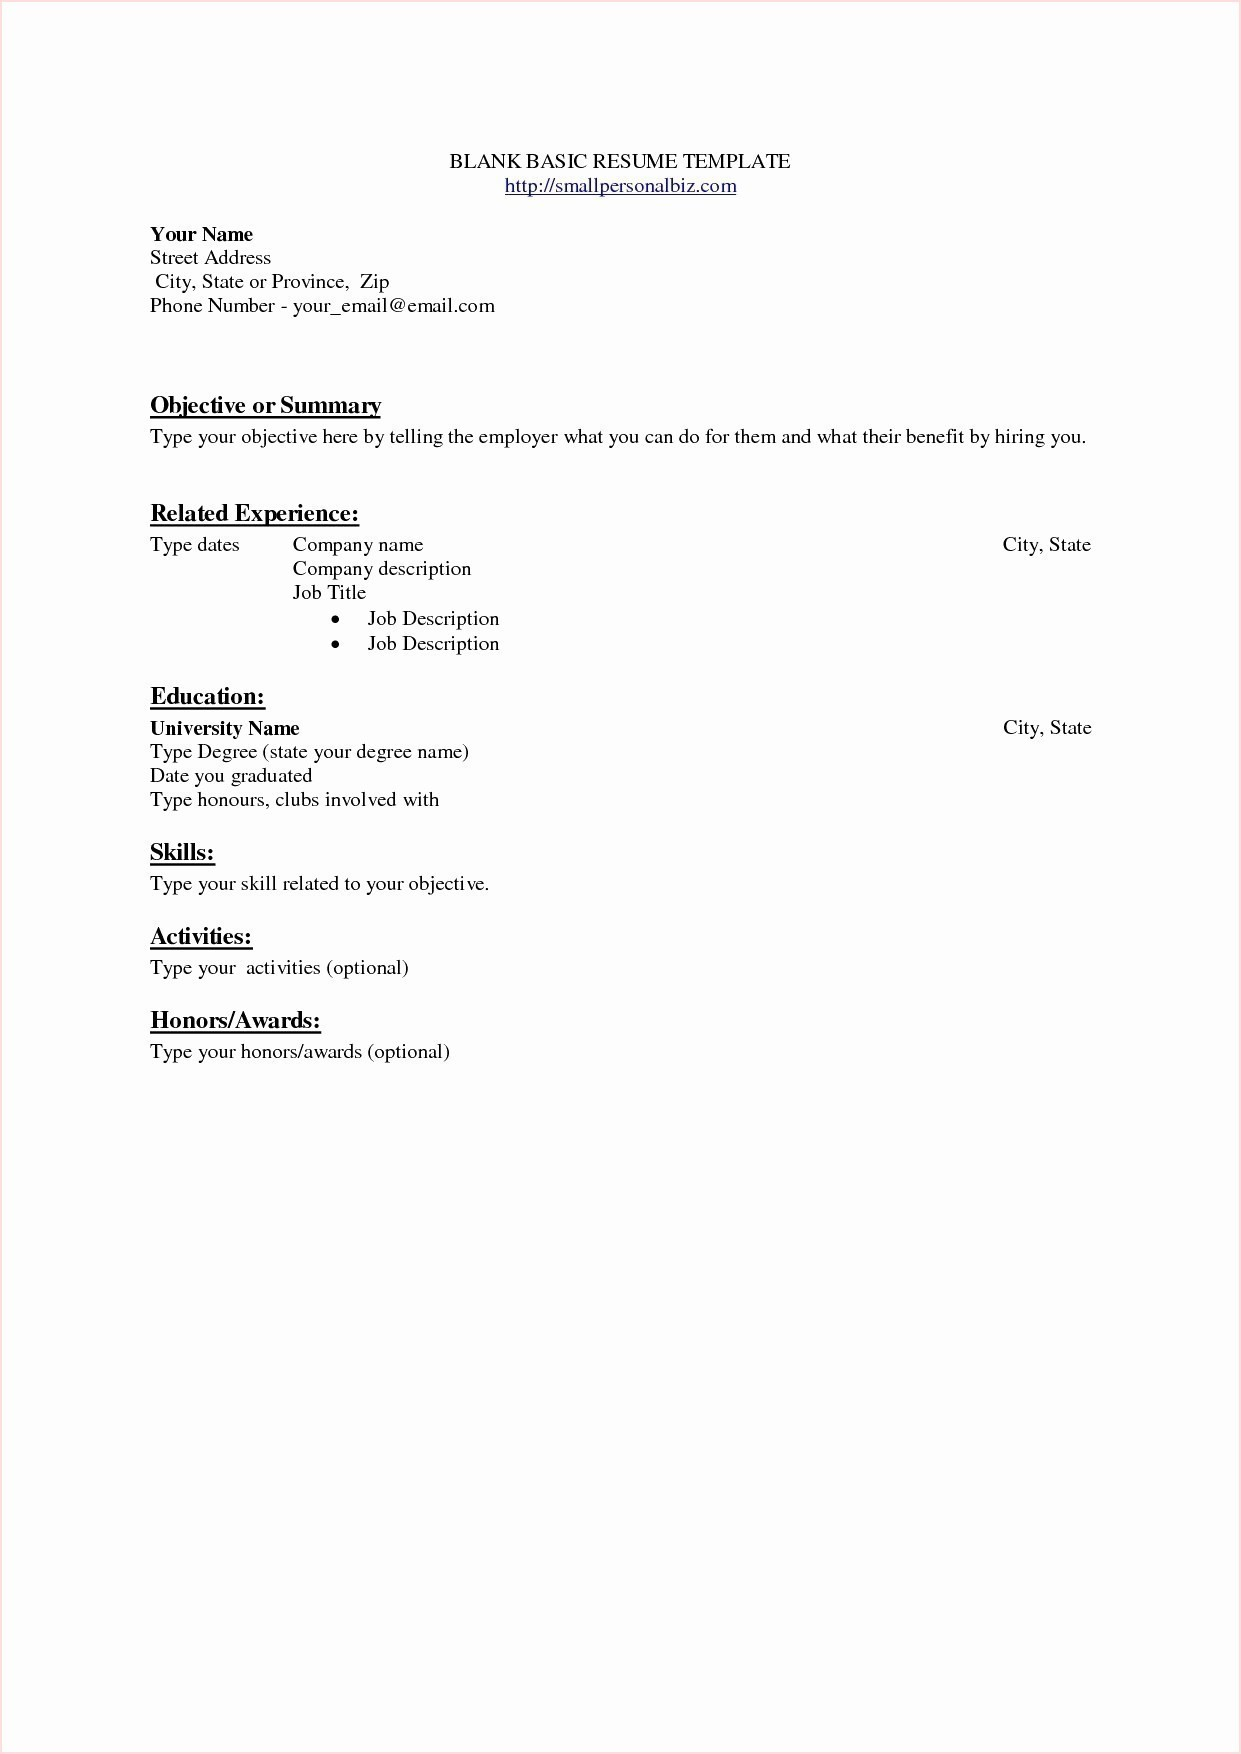 Basic Resume Template Resume Samples Of Skills And Qualifications Valid Basic Resume